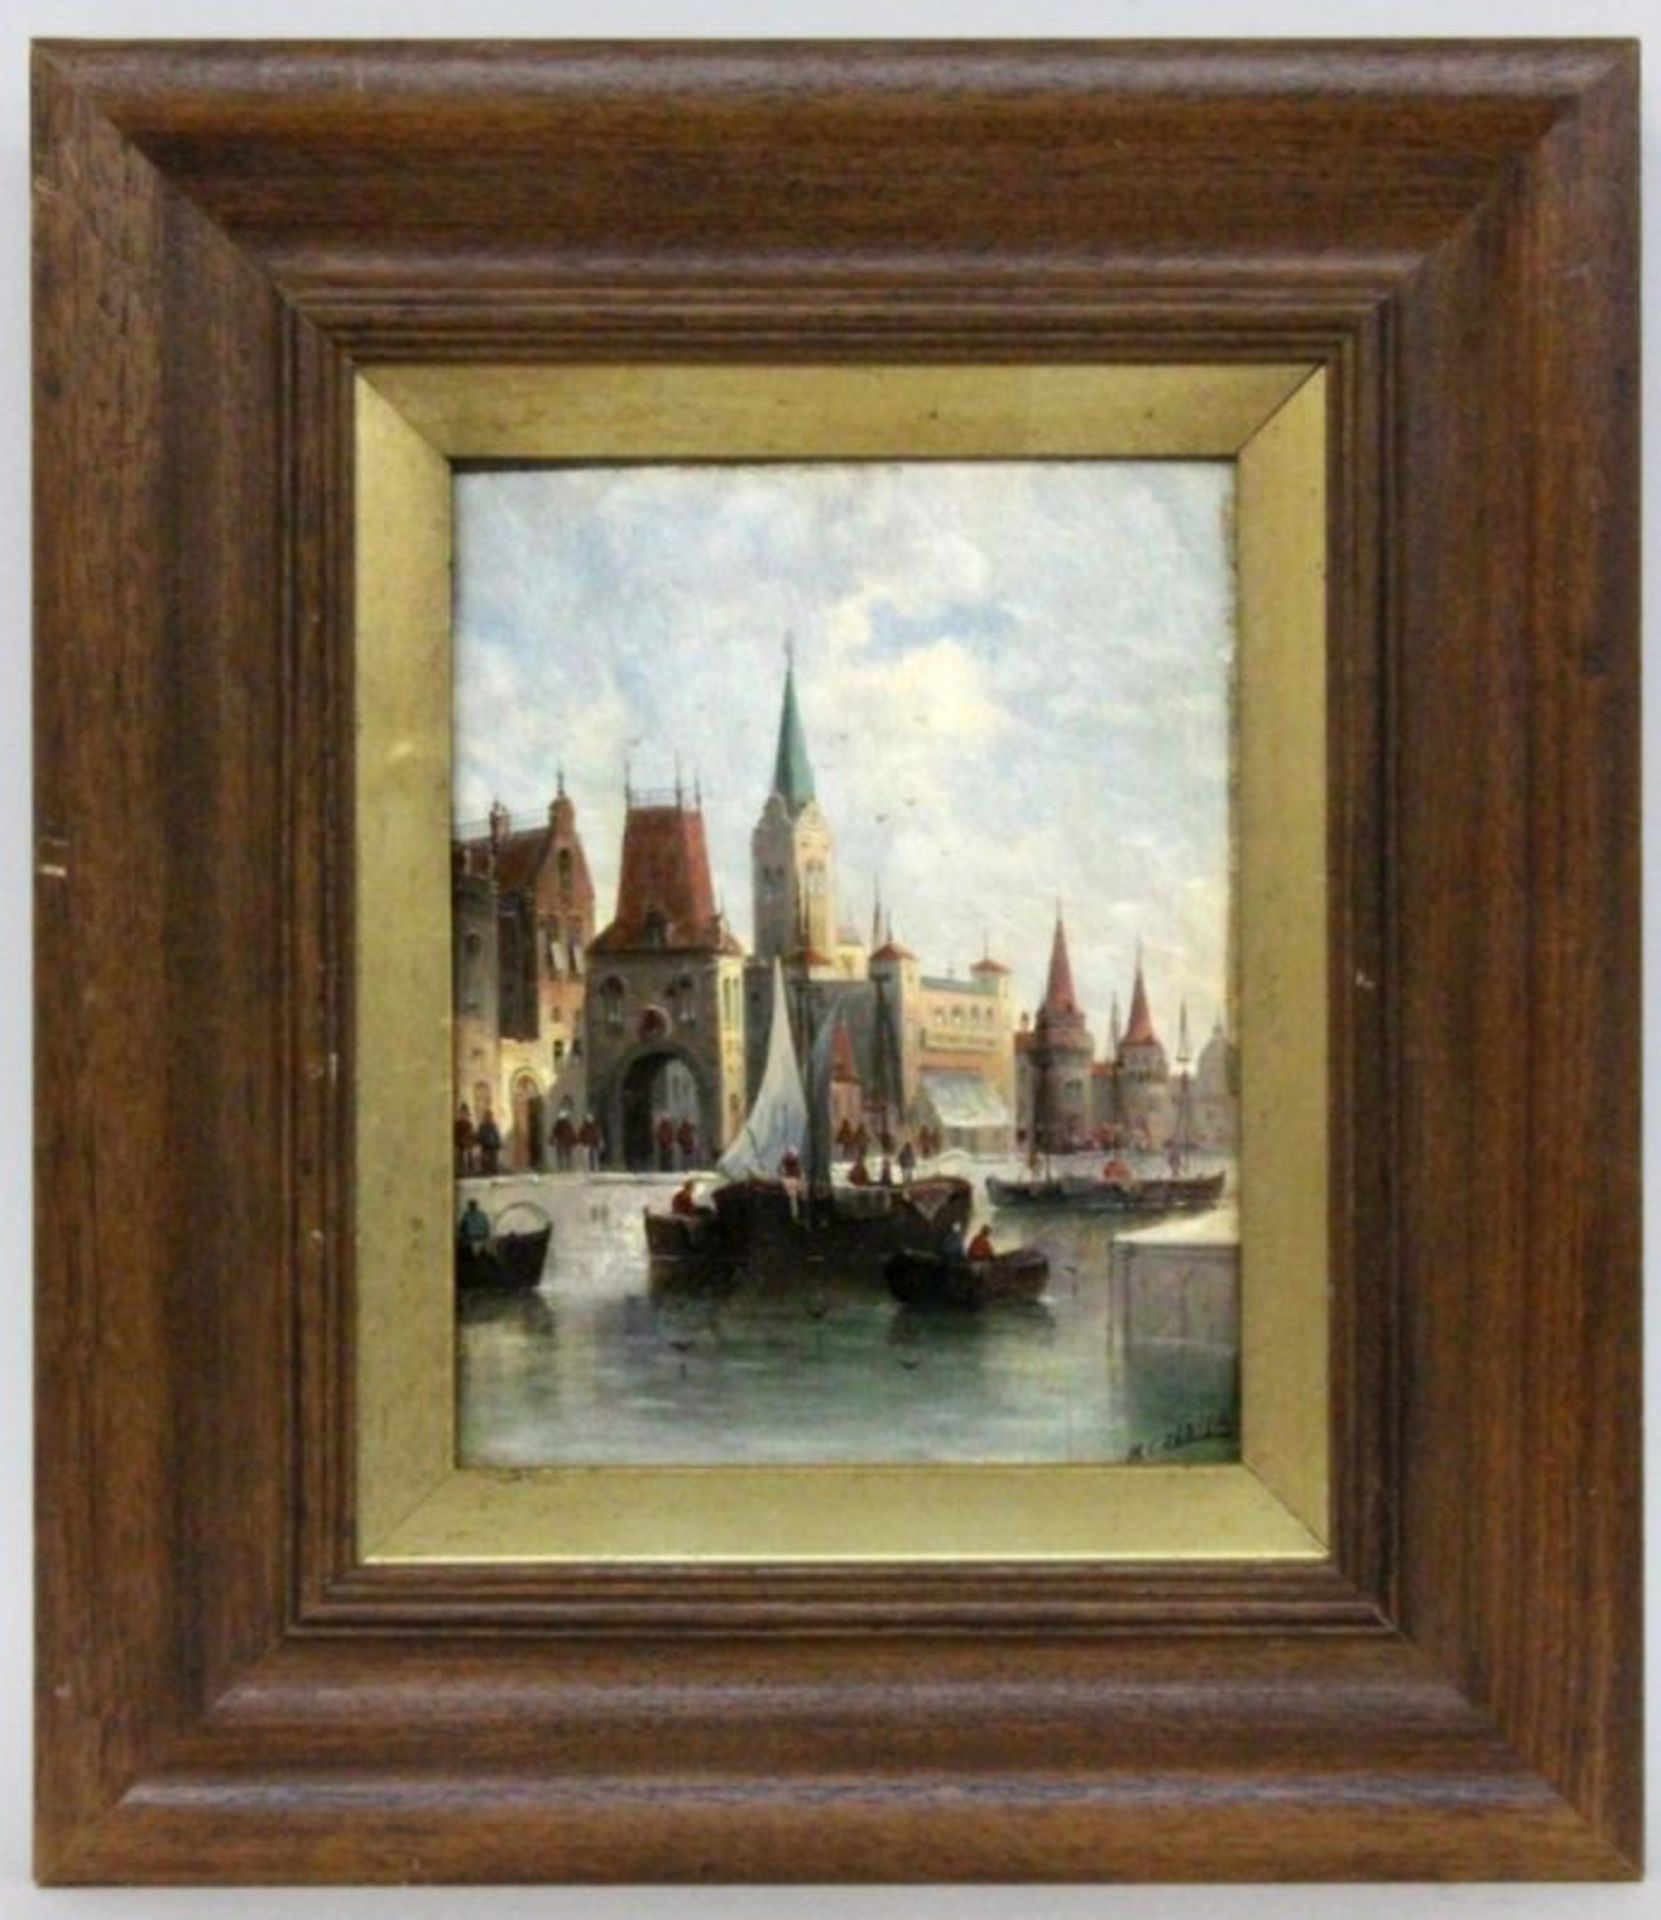 KAUFMANN, KARL Neupachlowitz 1843 - 1901 Vienna Harbour scene in front of a medieval city.